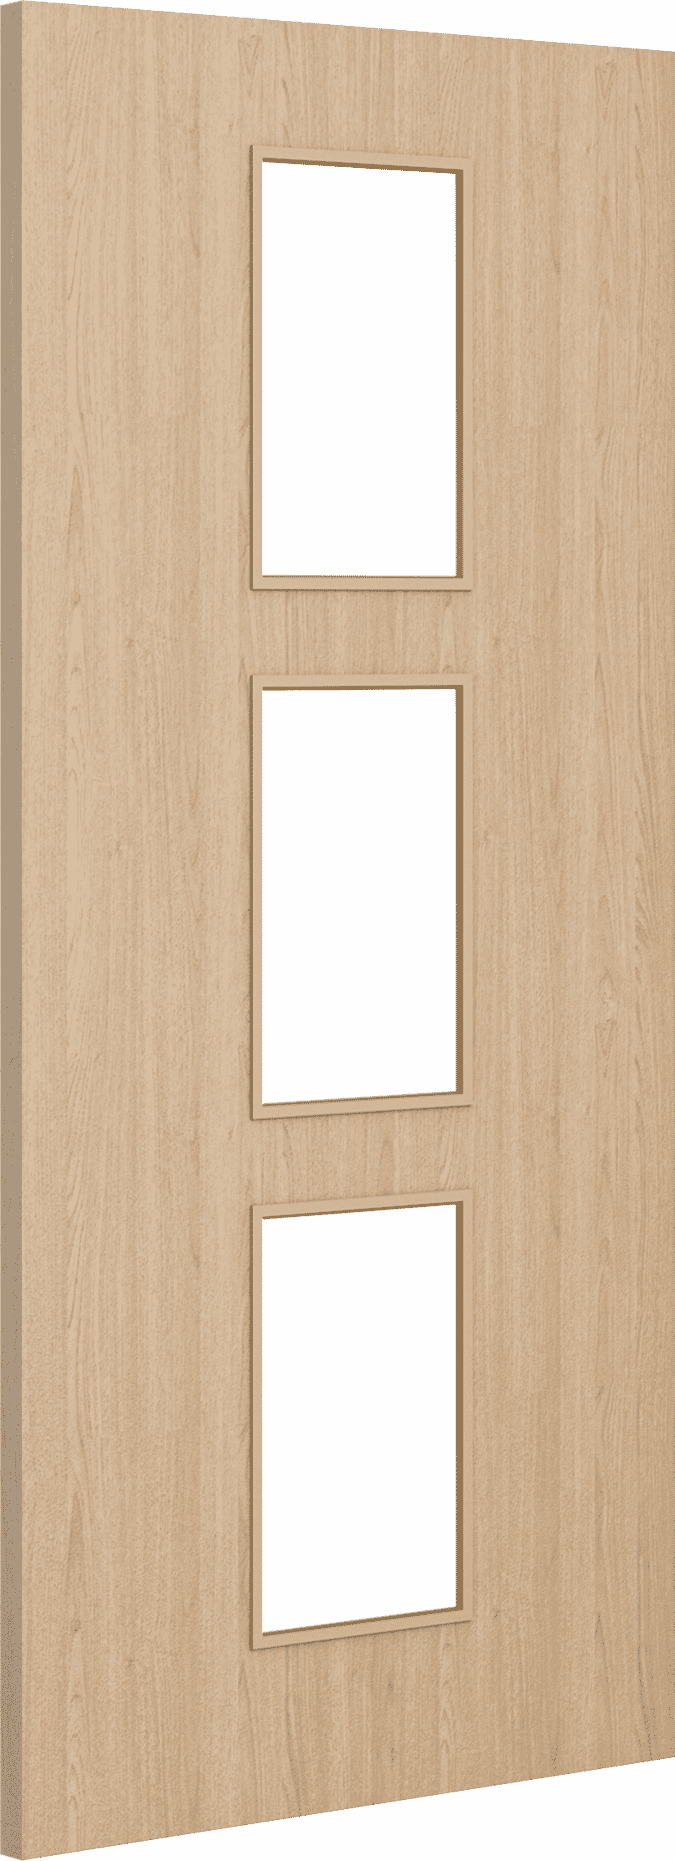 2040mm x 926mm x 44mm Architectural Oak 11 Frosted Glazed - Prefinished FD30 Fire Door Blank